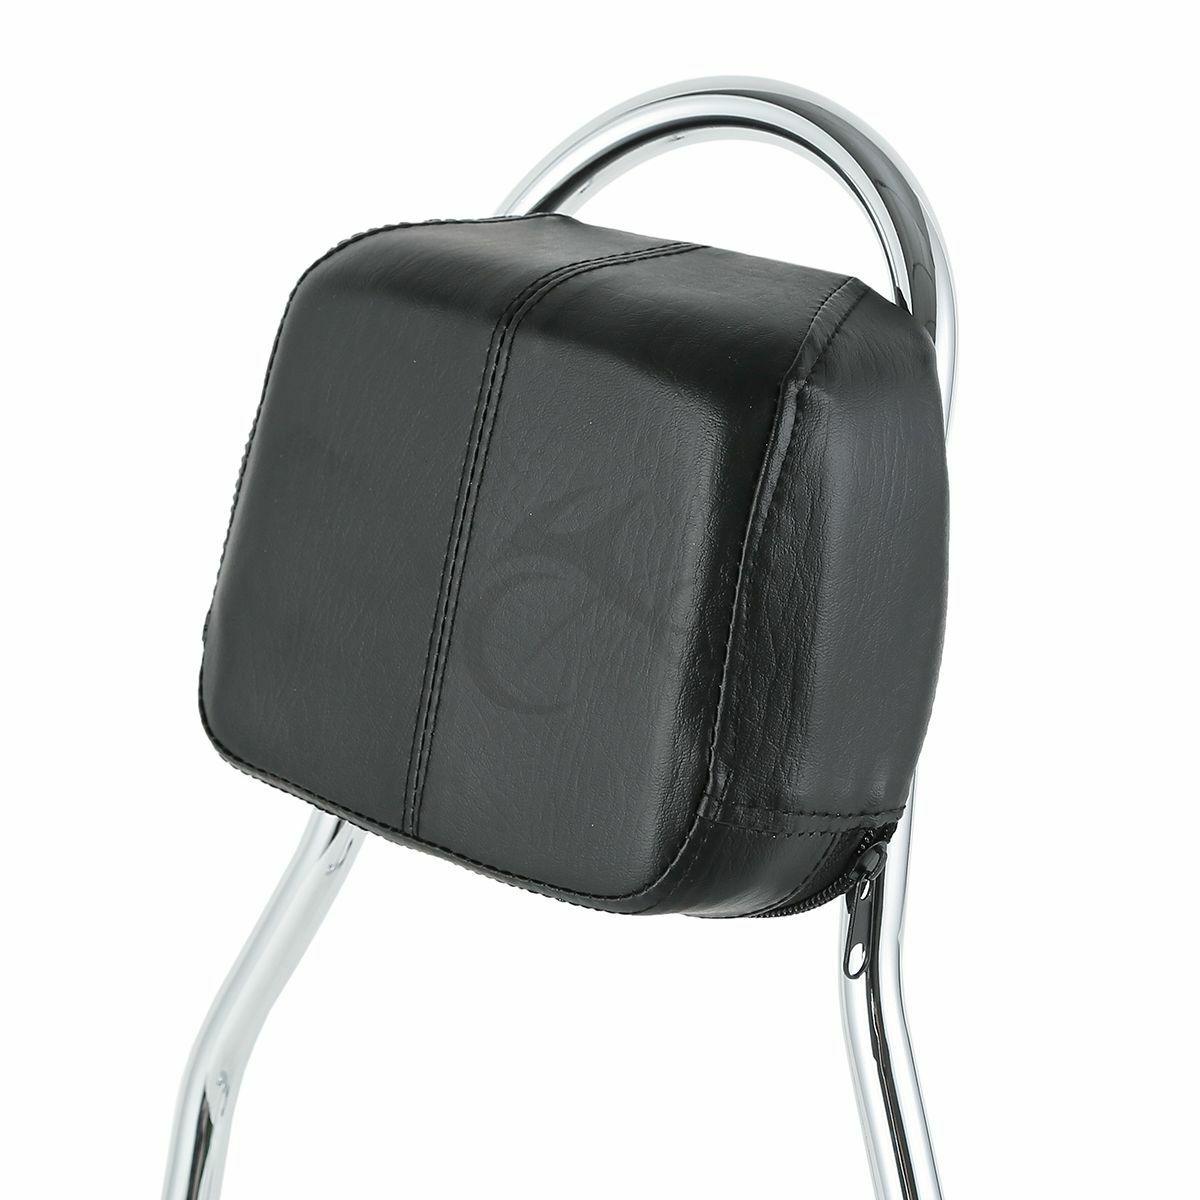 Detachable Passenger Sissy Bar Backrest Fit For Harley Softail FLST Chrome/Black - Moto Life Products